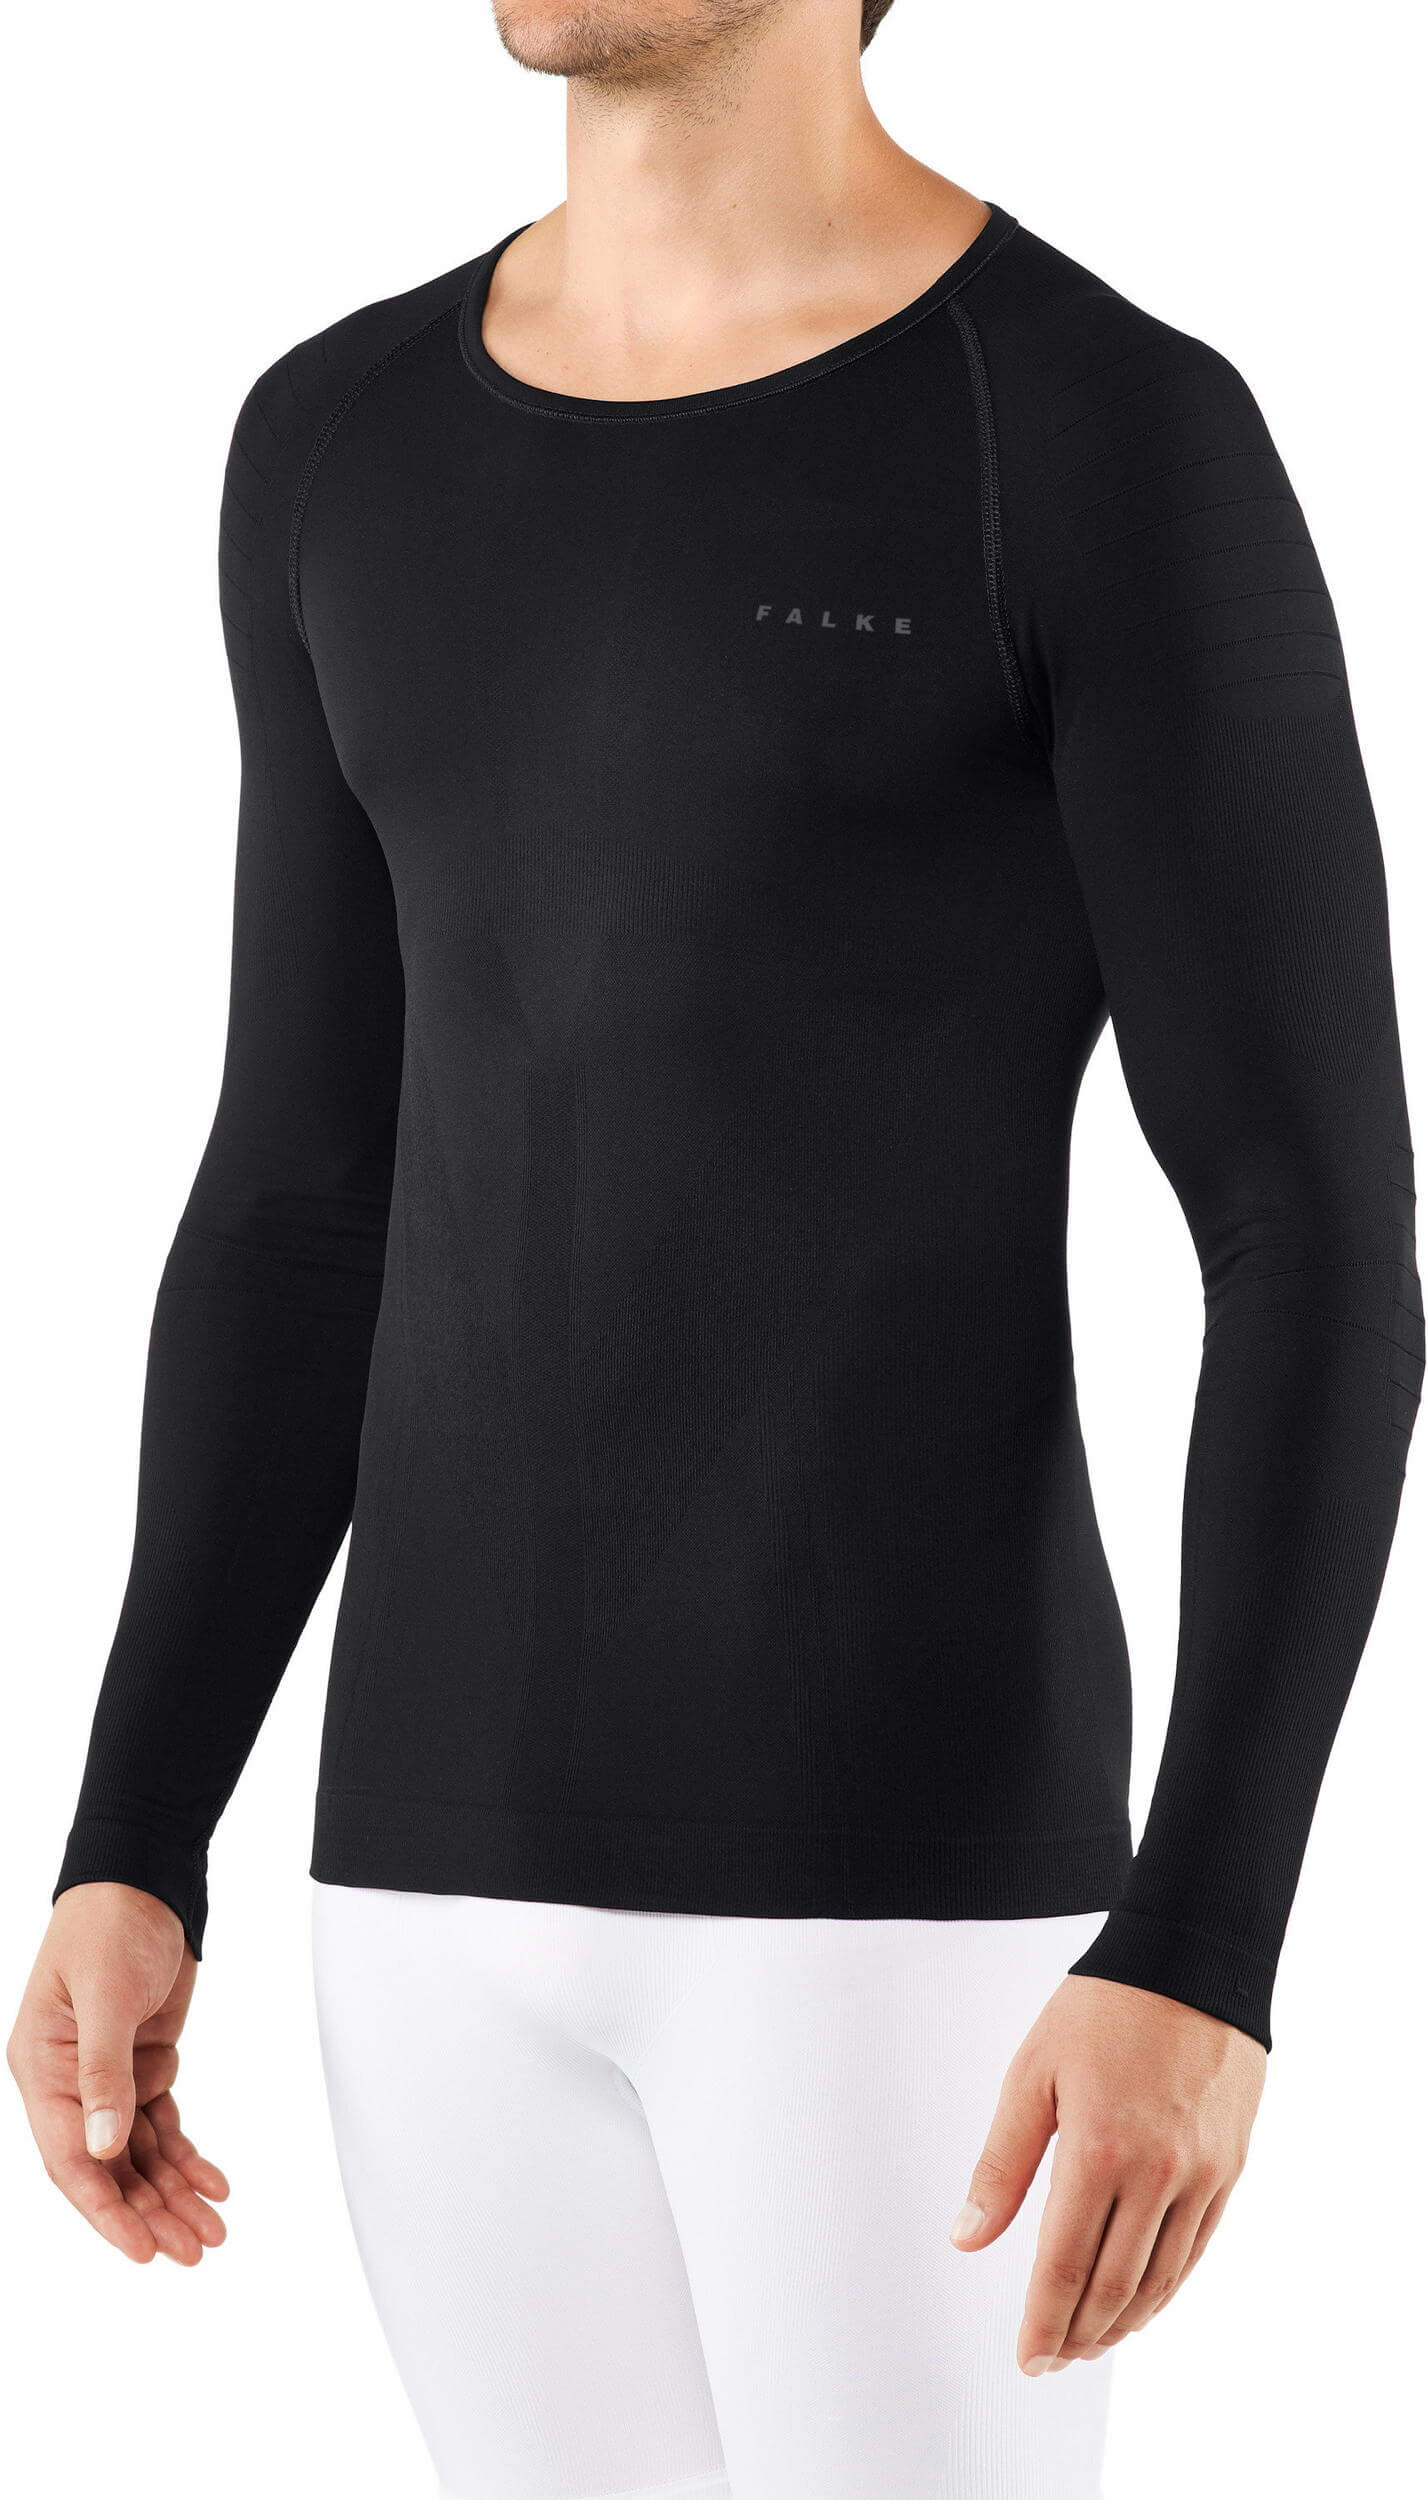 Falke Warm Longsleeved Shirt, black